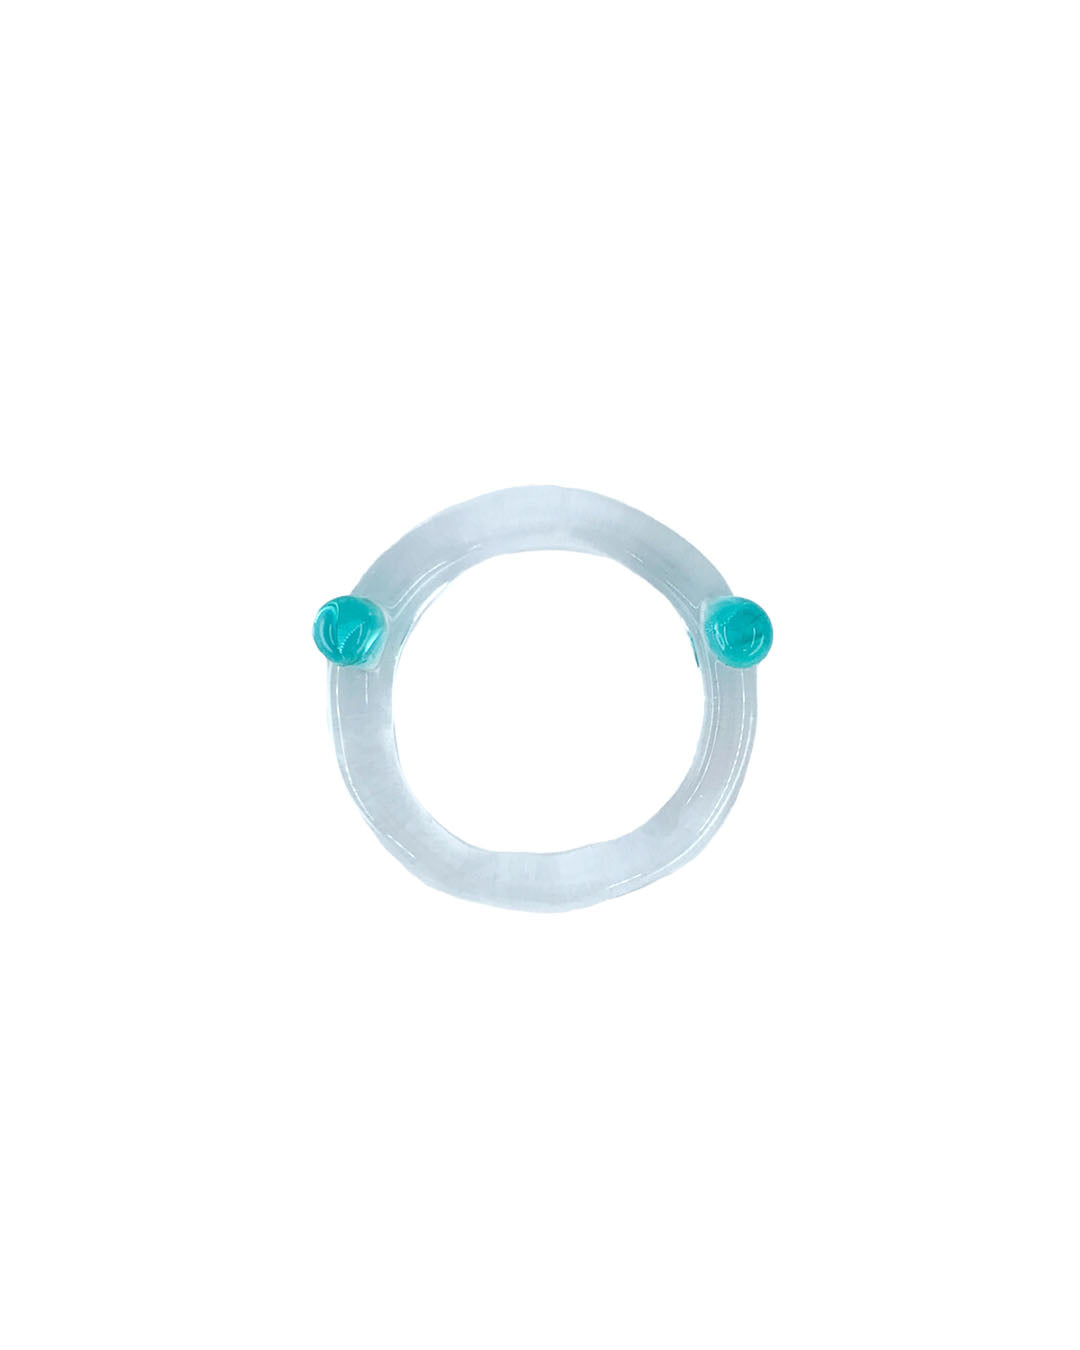 Bubbly Bubbles - Murano glass ring